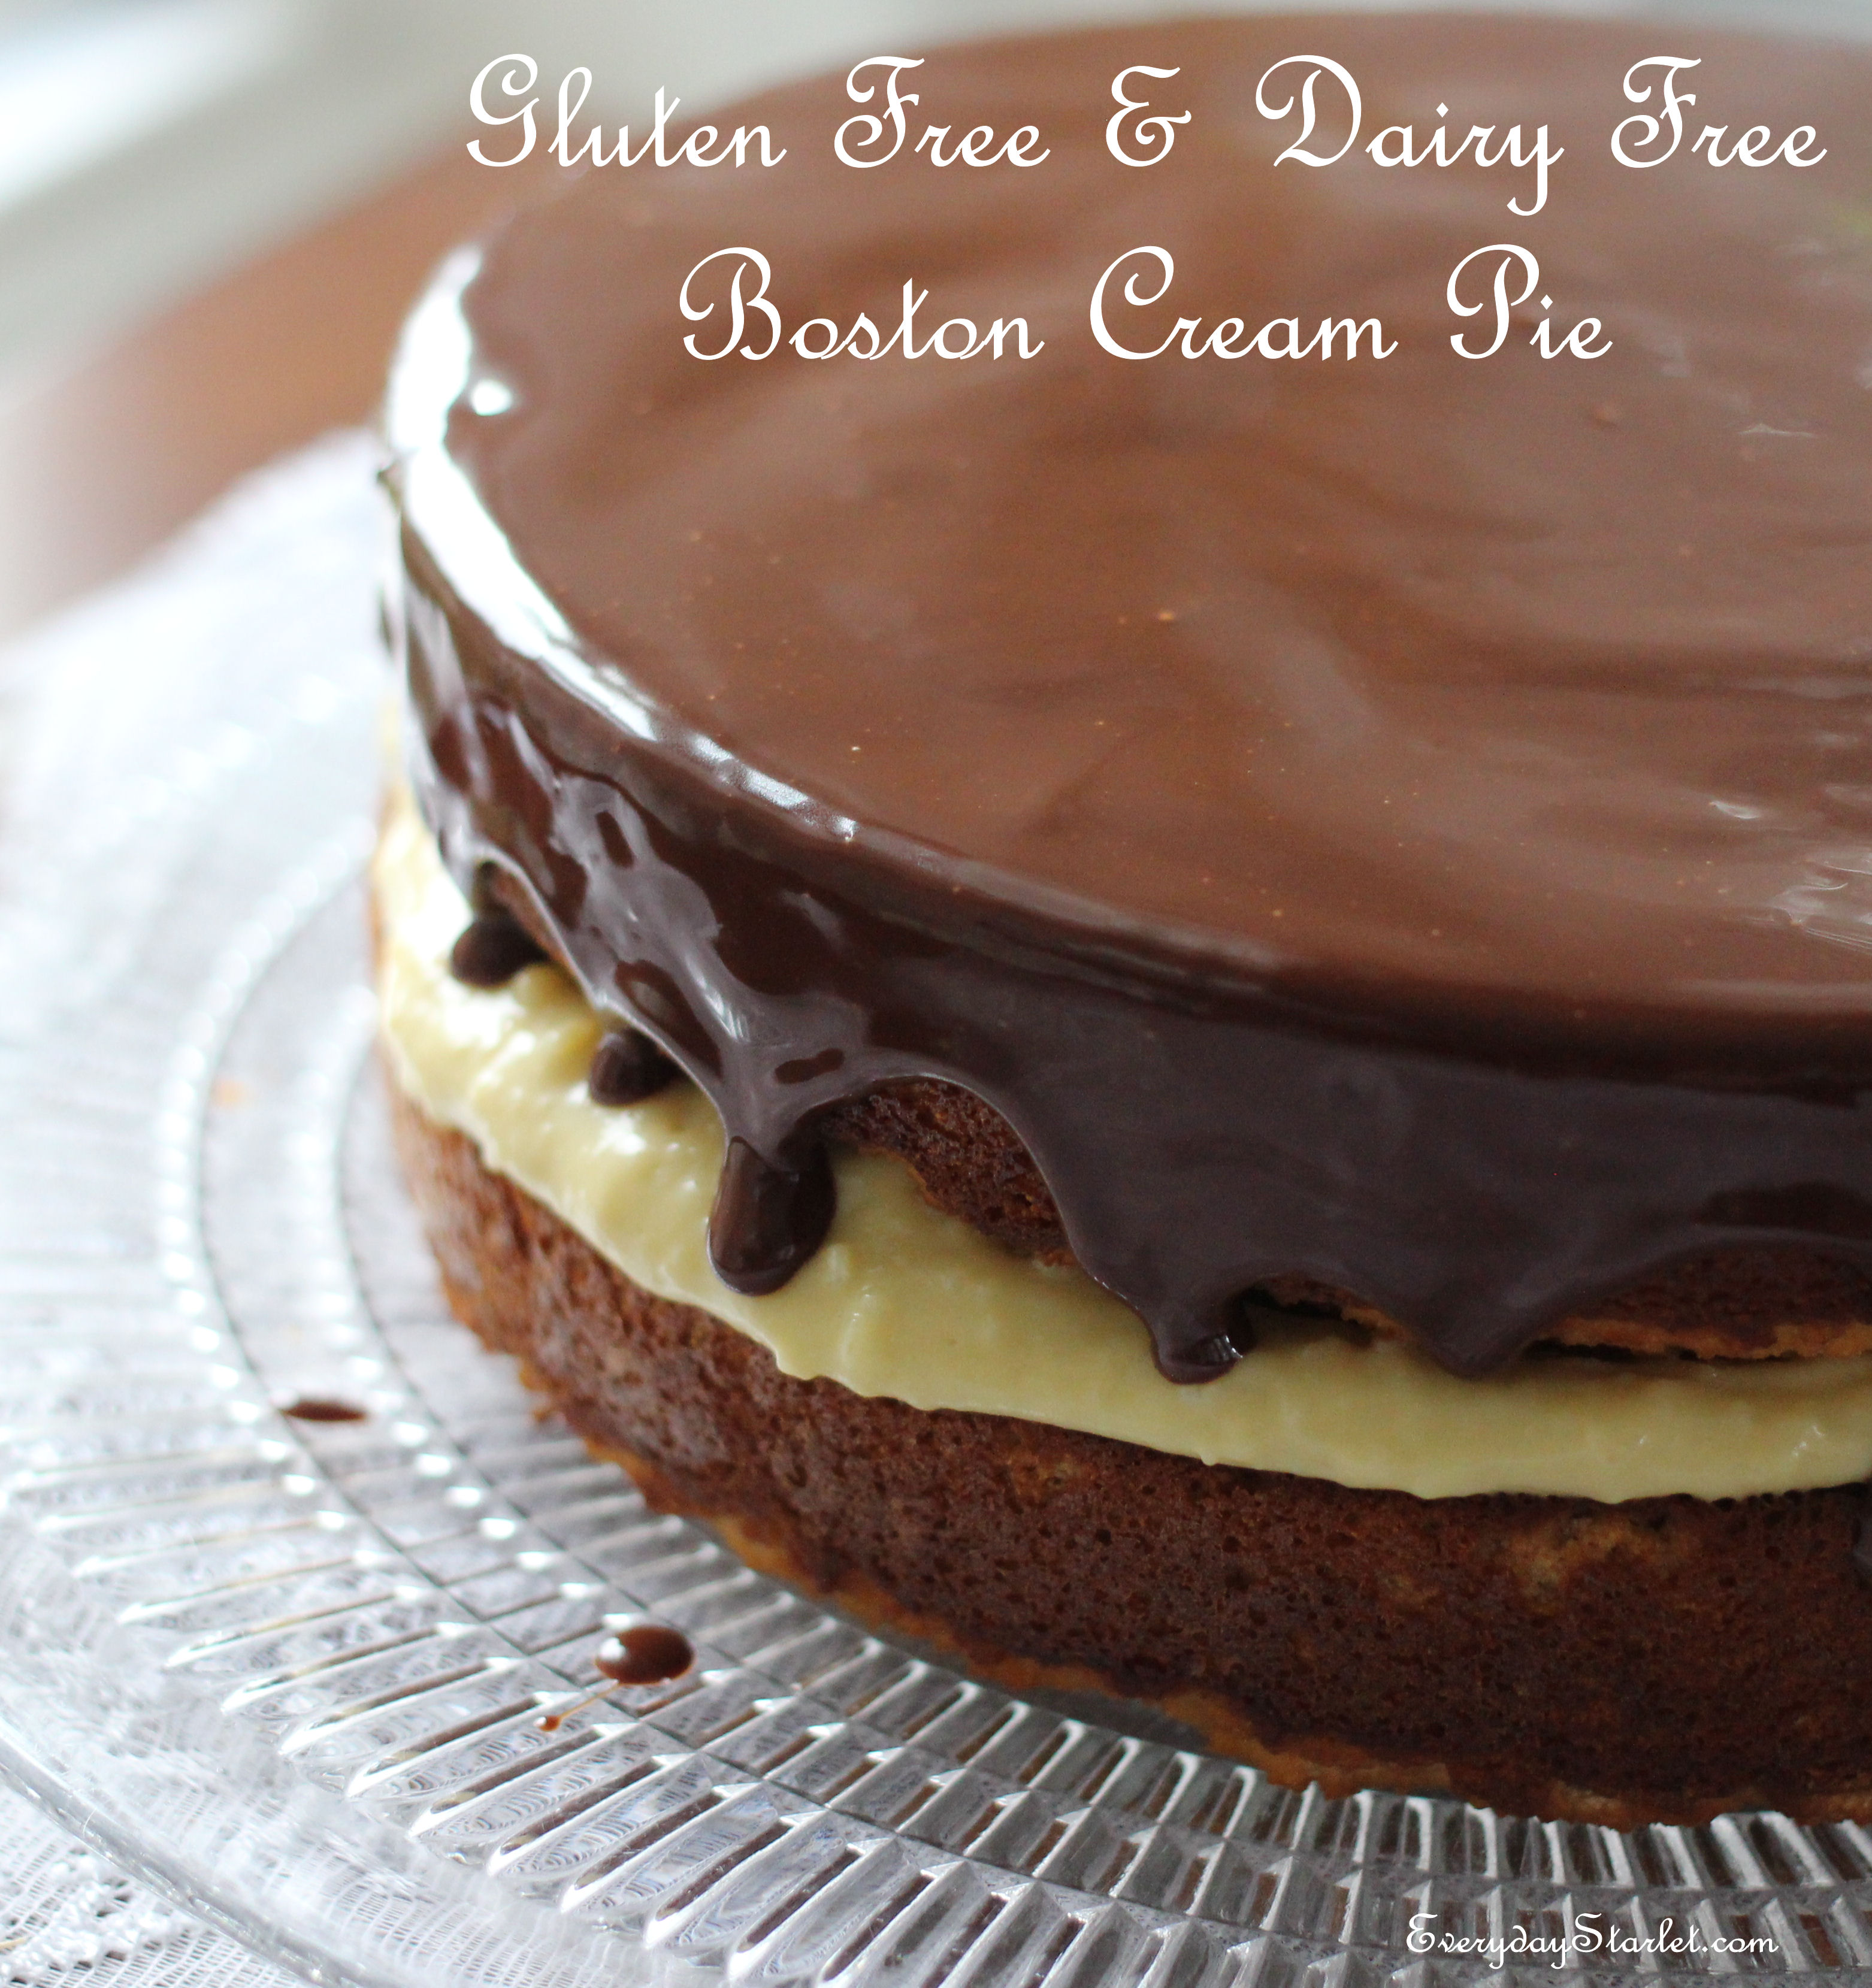 Gluten Free Dairy Free Boston Cream Pie